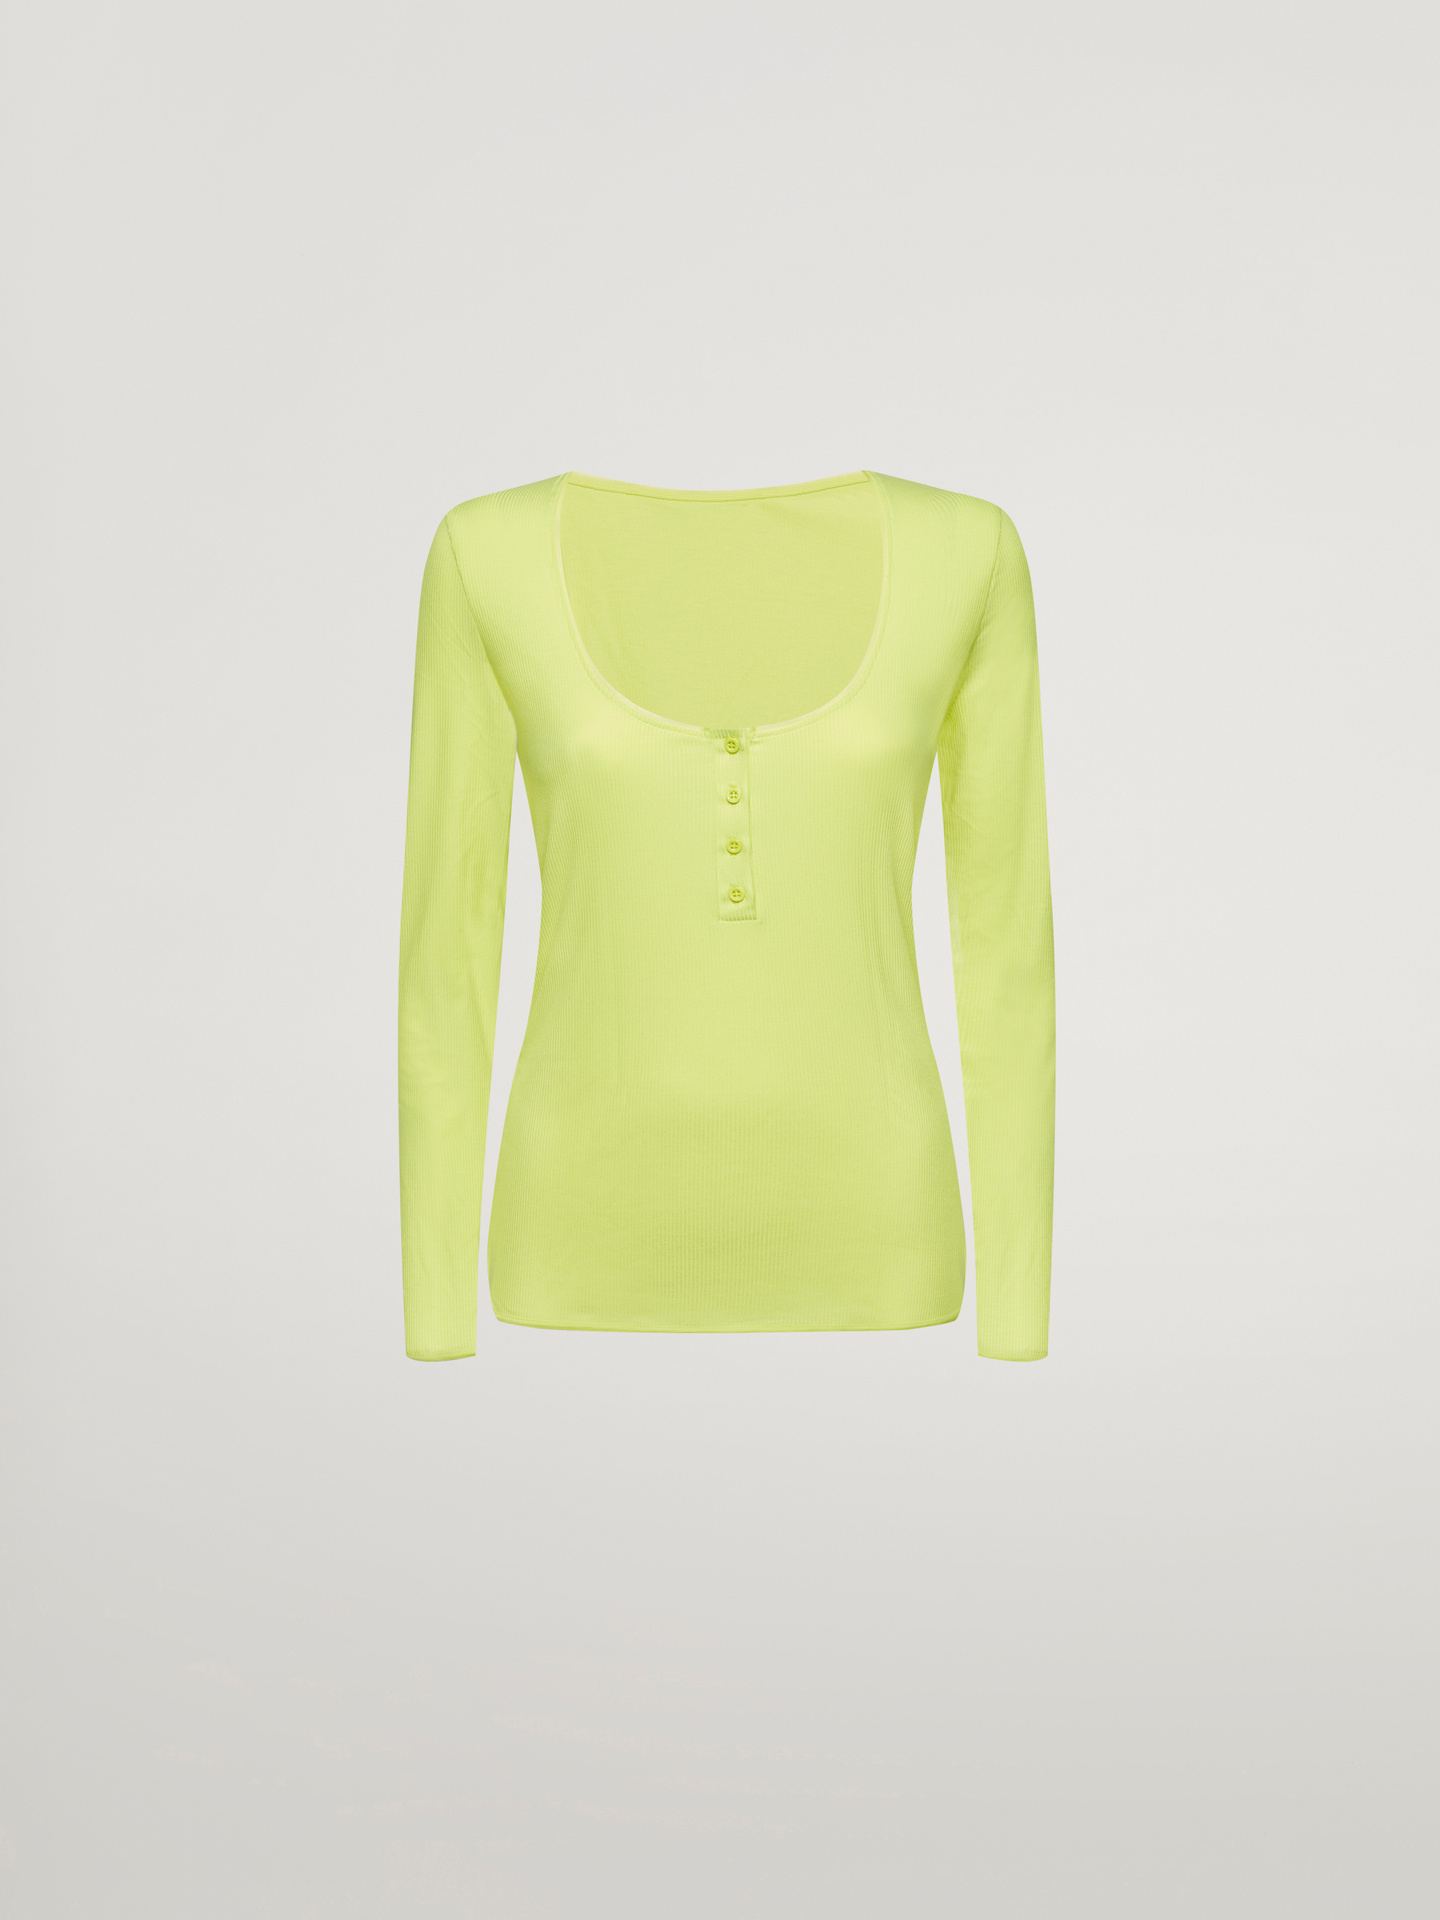 Wolford - Henley Top Long Sleeves, Frau, paradise green, Größe: M günstig online kaufen